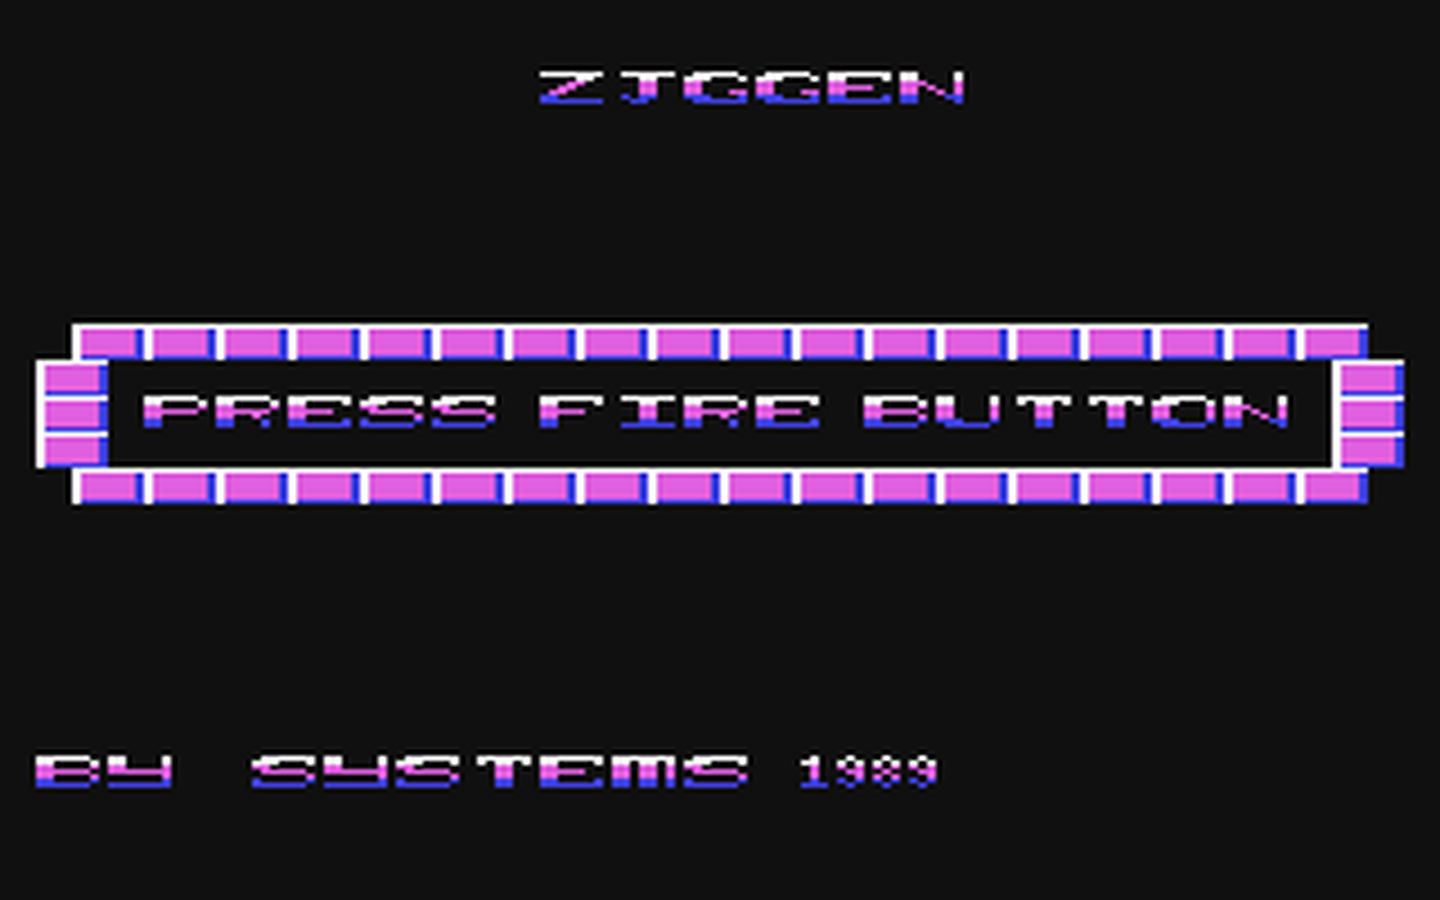 C64 GameBase Zjggen Systems_Editoriale_s.r.l. 1989